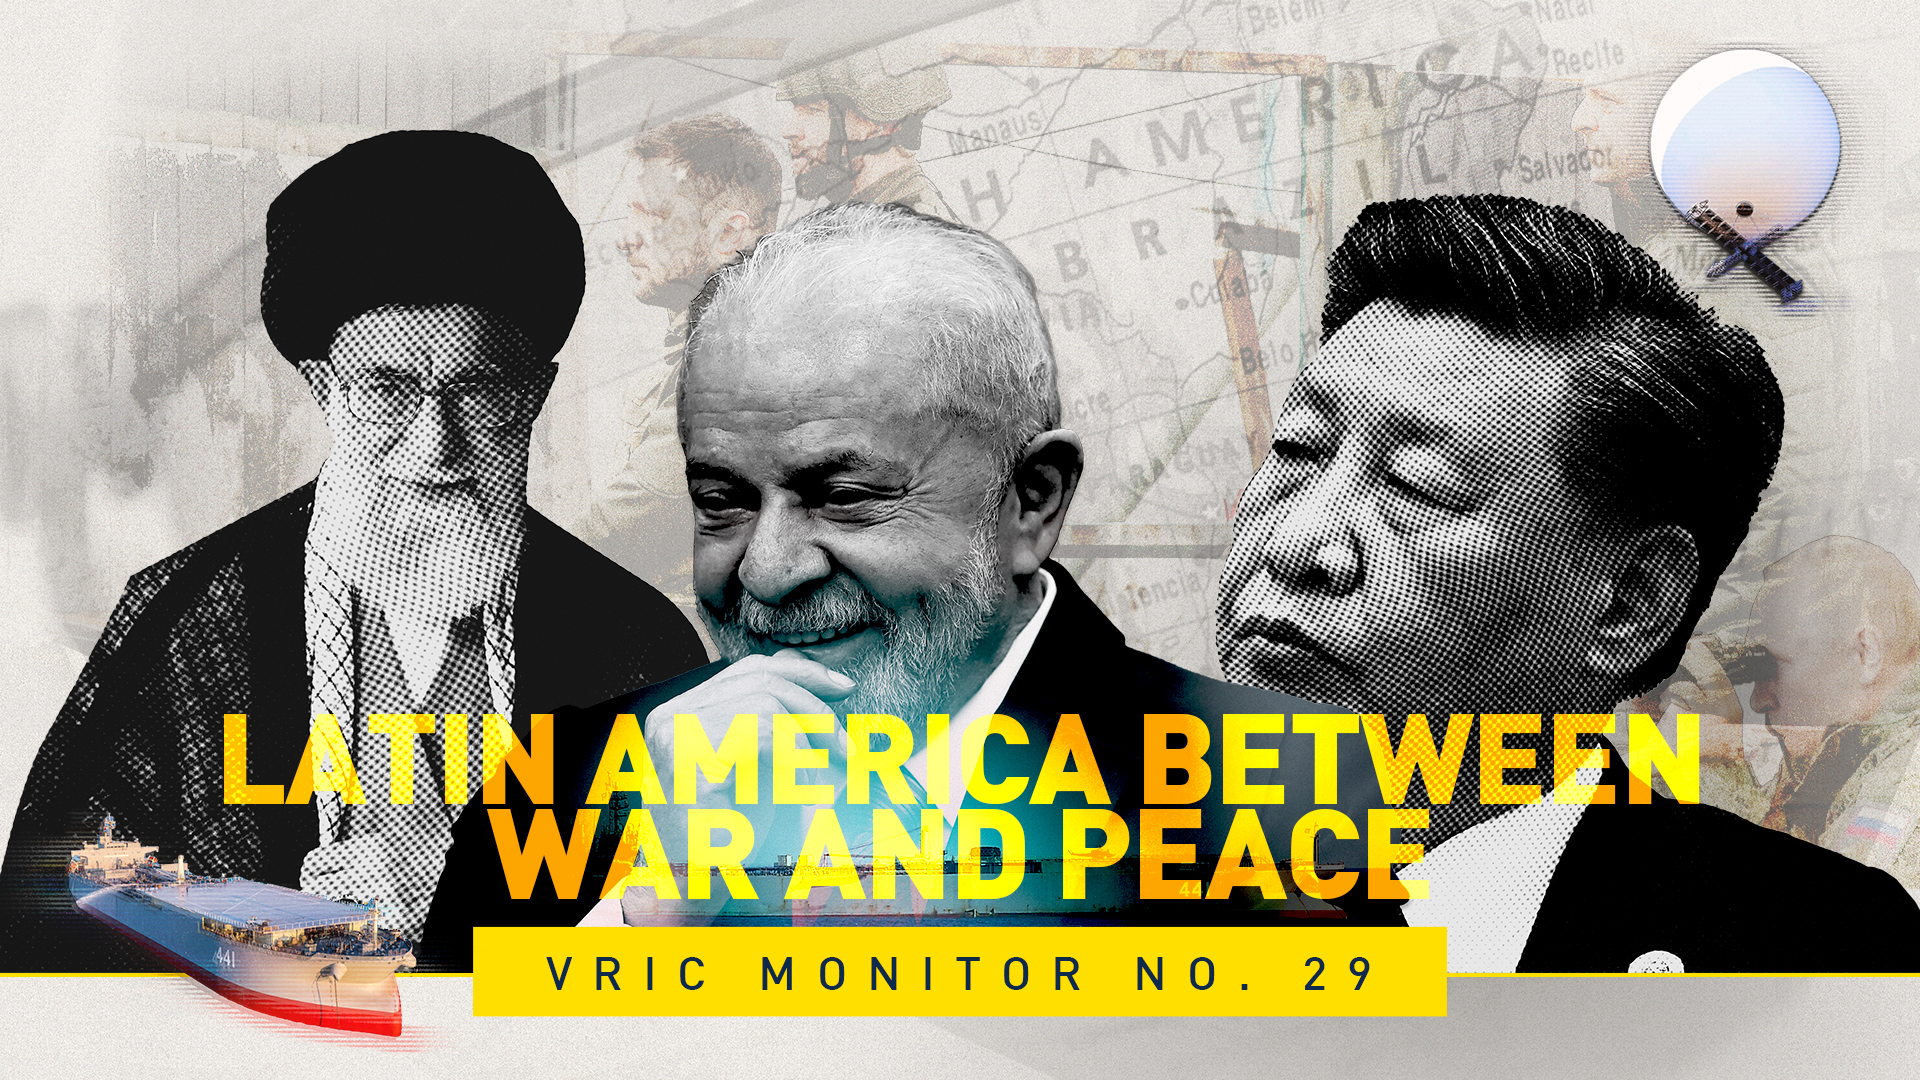 VRIC MONITOR No. 29 | Latin America between War and Peace